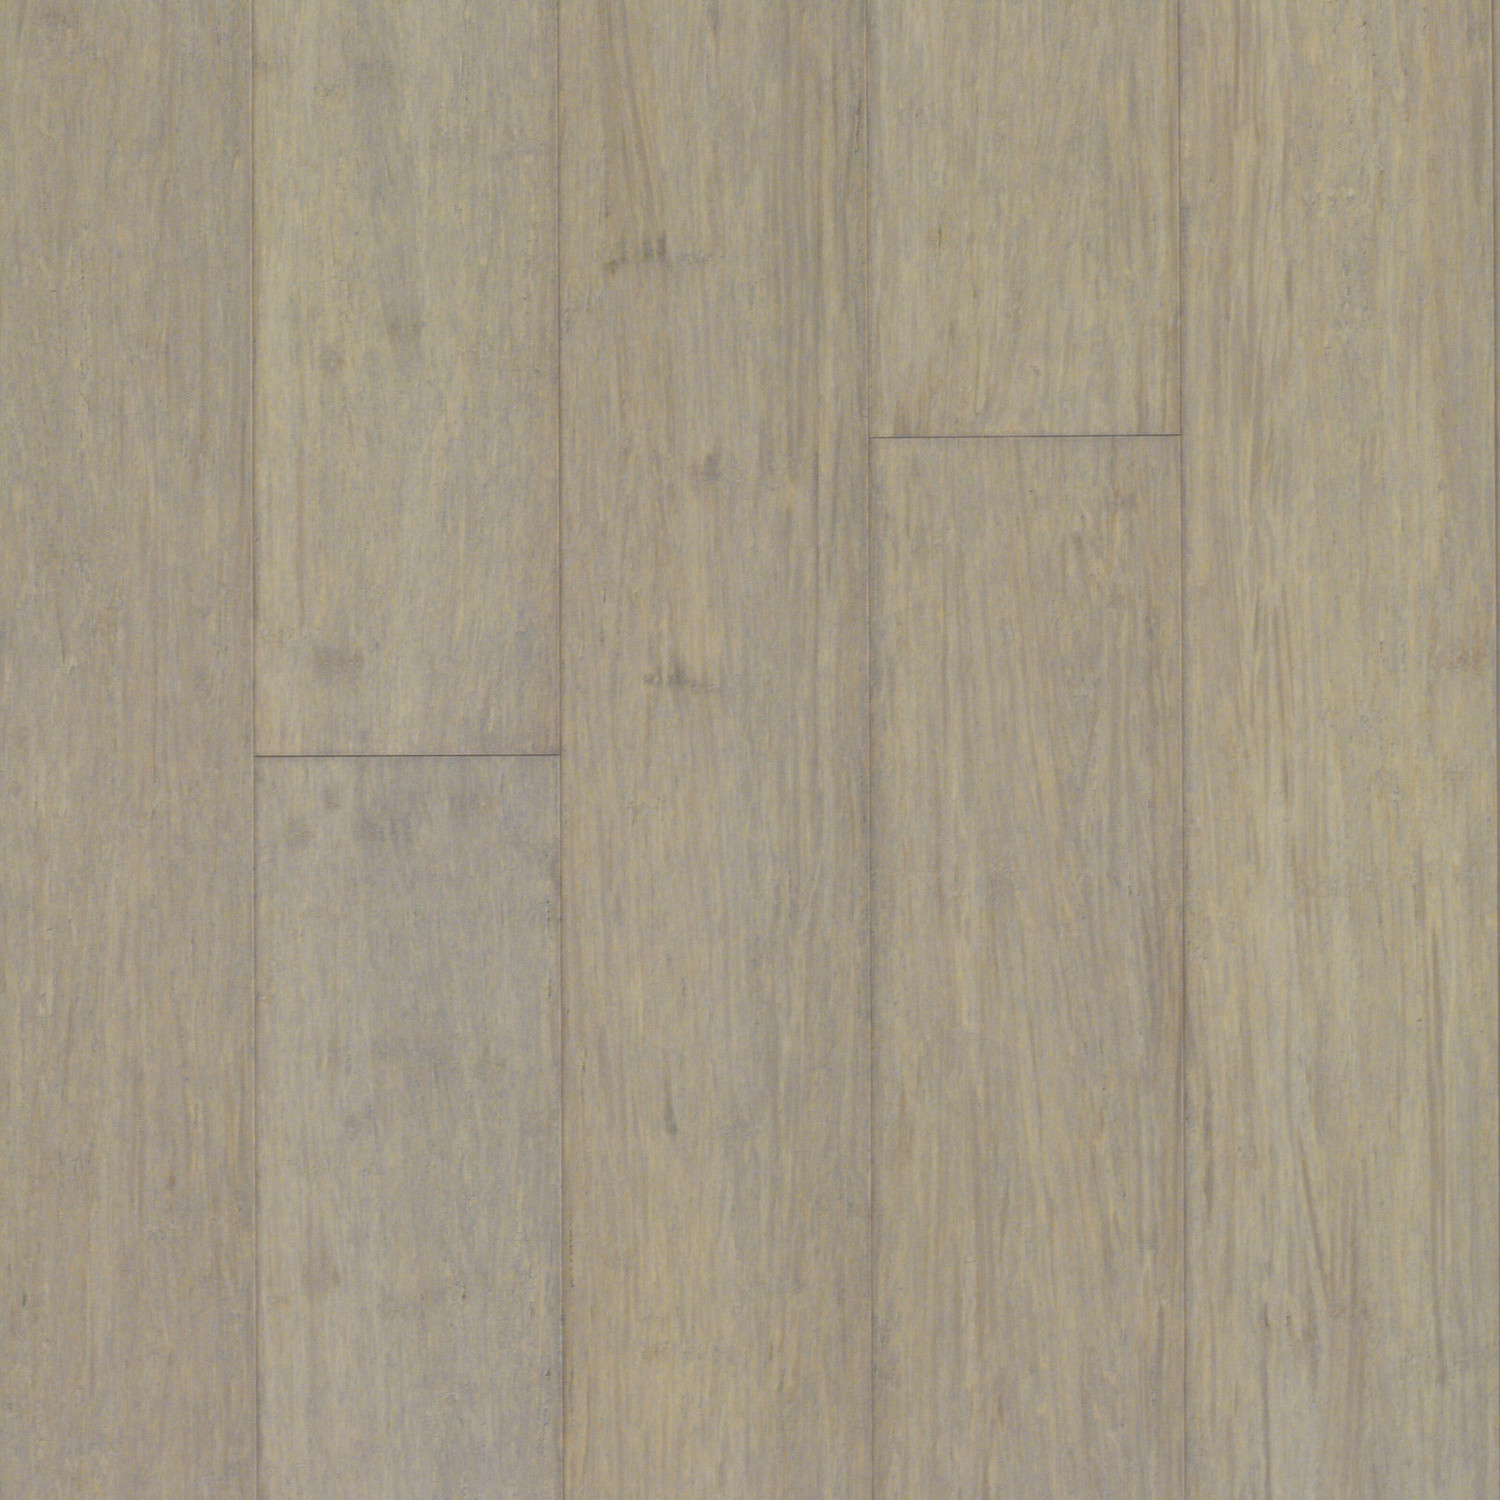 18 Wonderful Harold's Hardwood Flooring Newington Ct 2024 free download haroldamp039s hardwood flooring newington ct of bamboo flooring toronto gallery home furnish flooring furn within bamboo flooring toronto